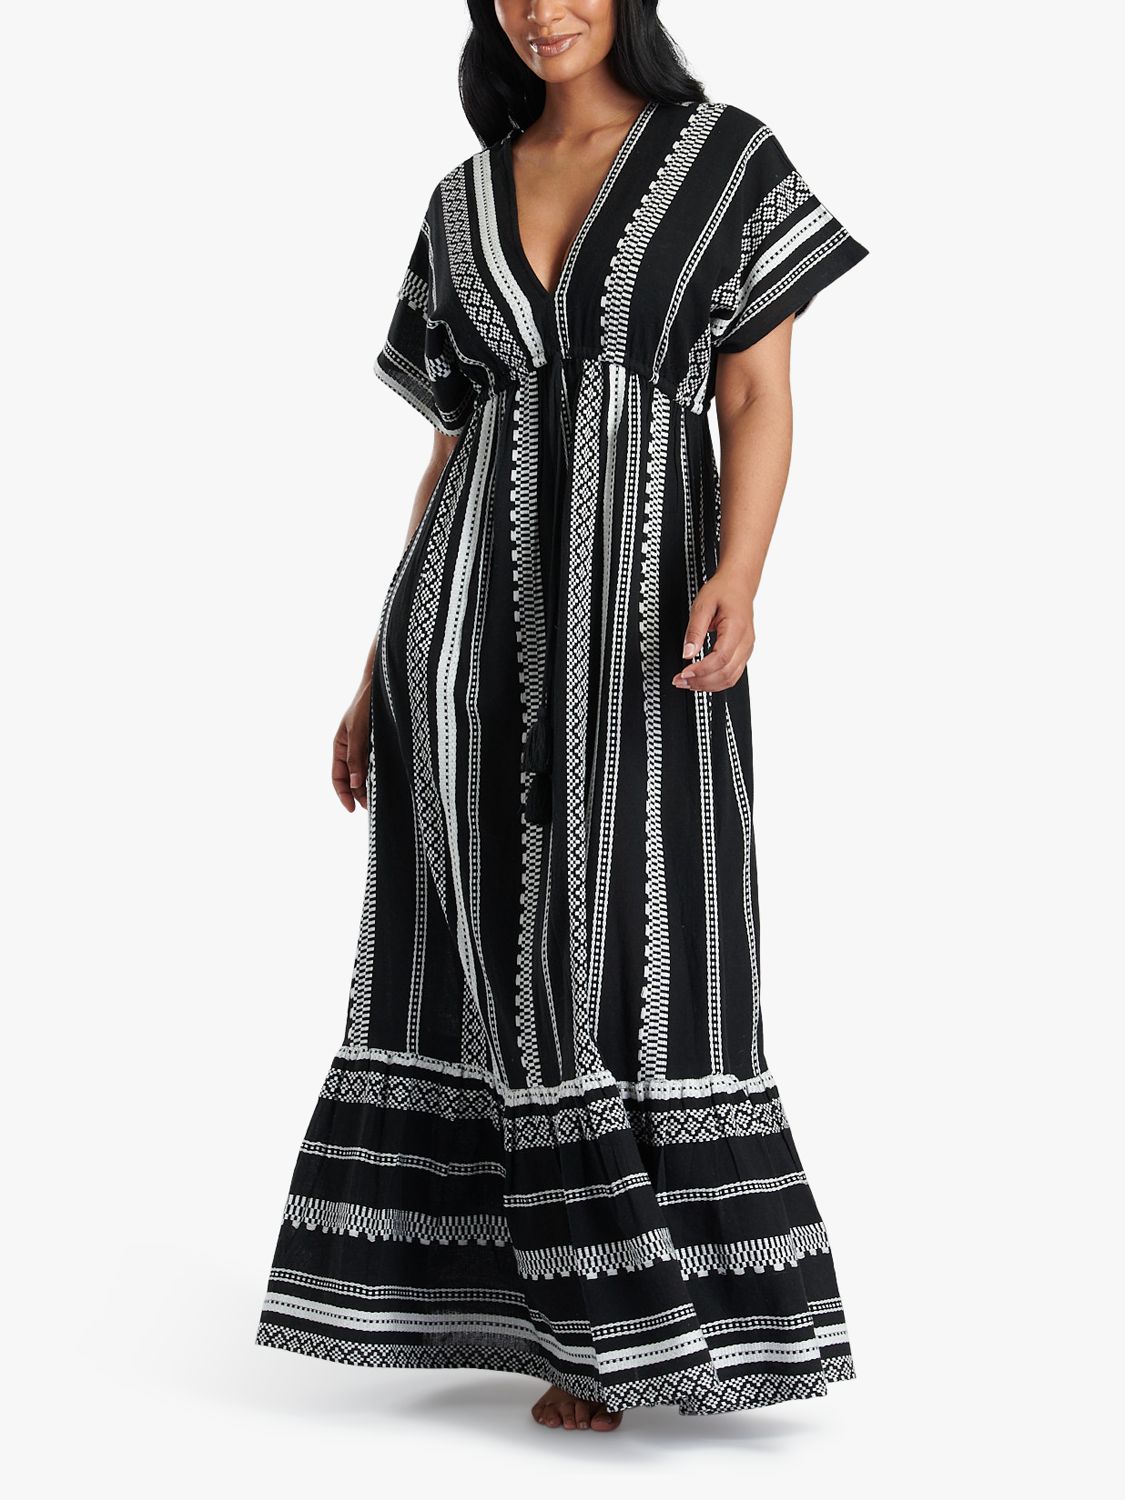 South Beach Tiered Maxi Dress, Black, 8